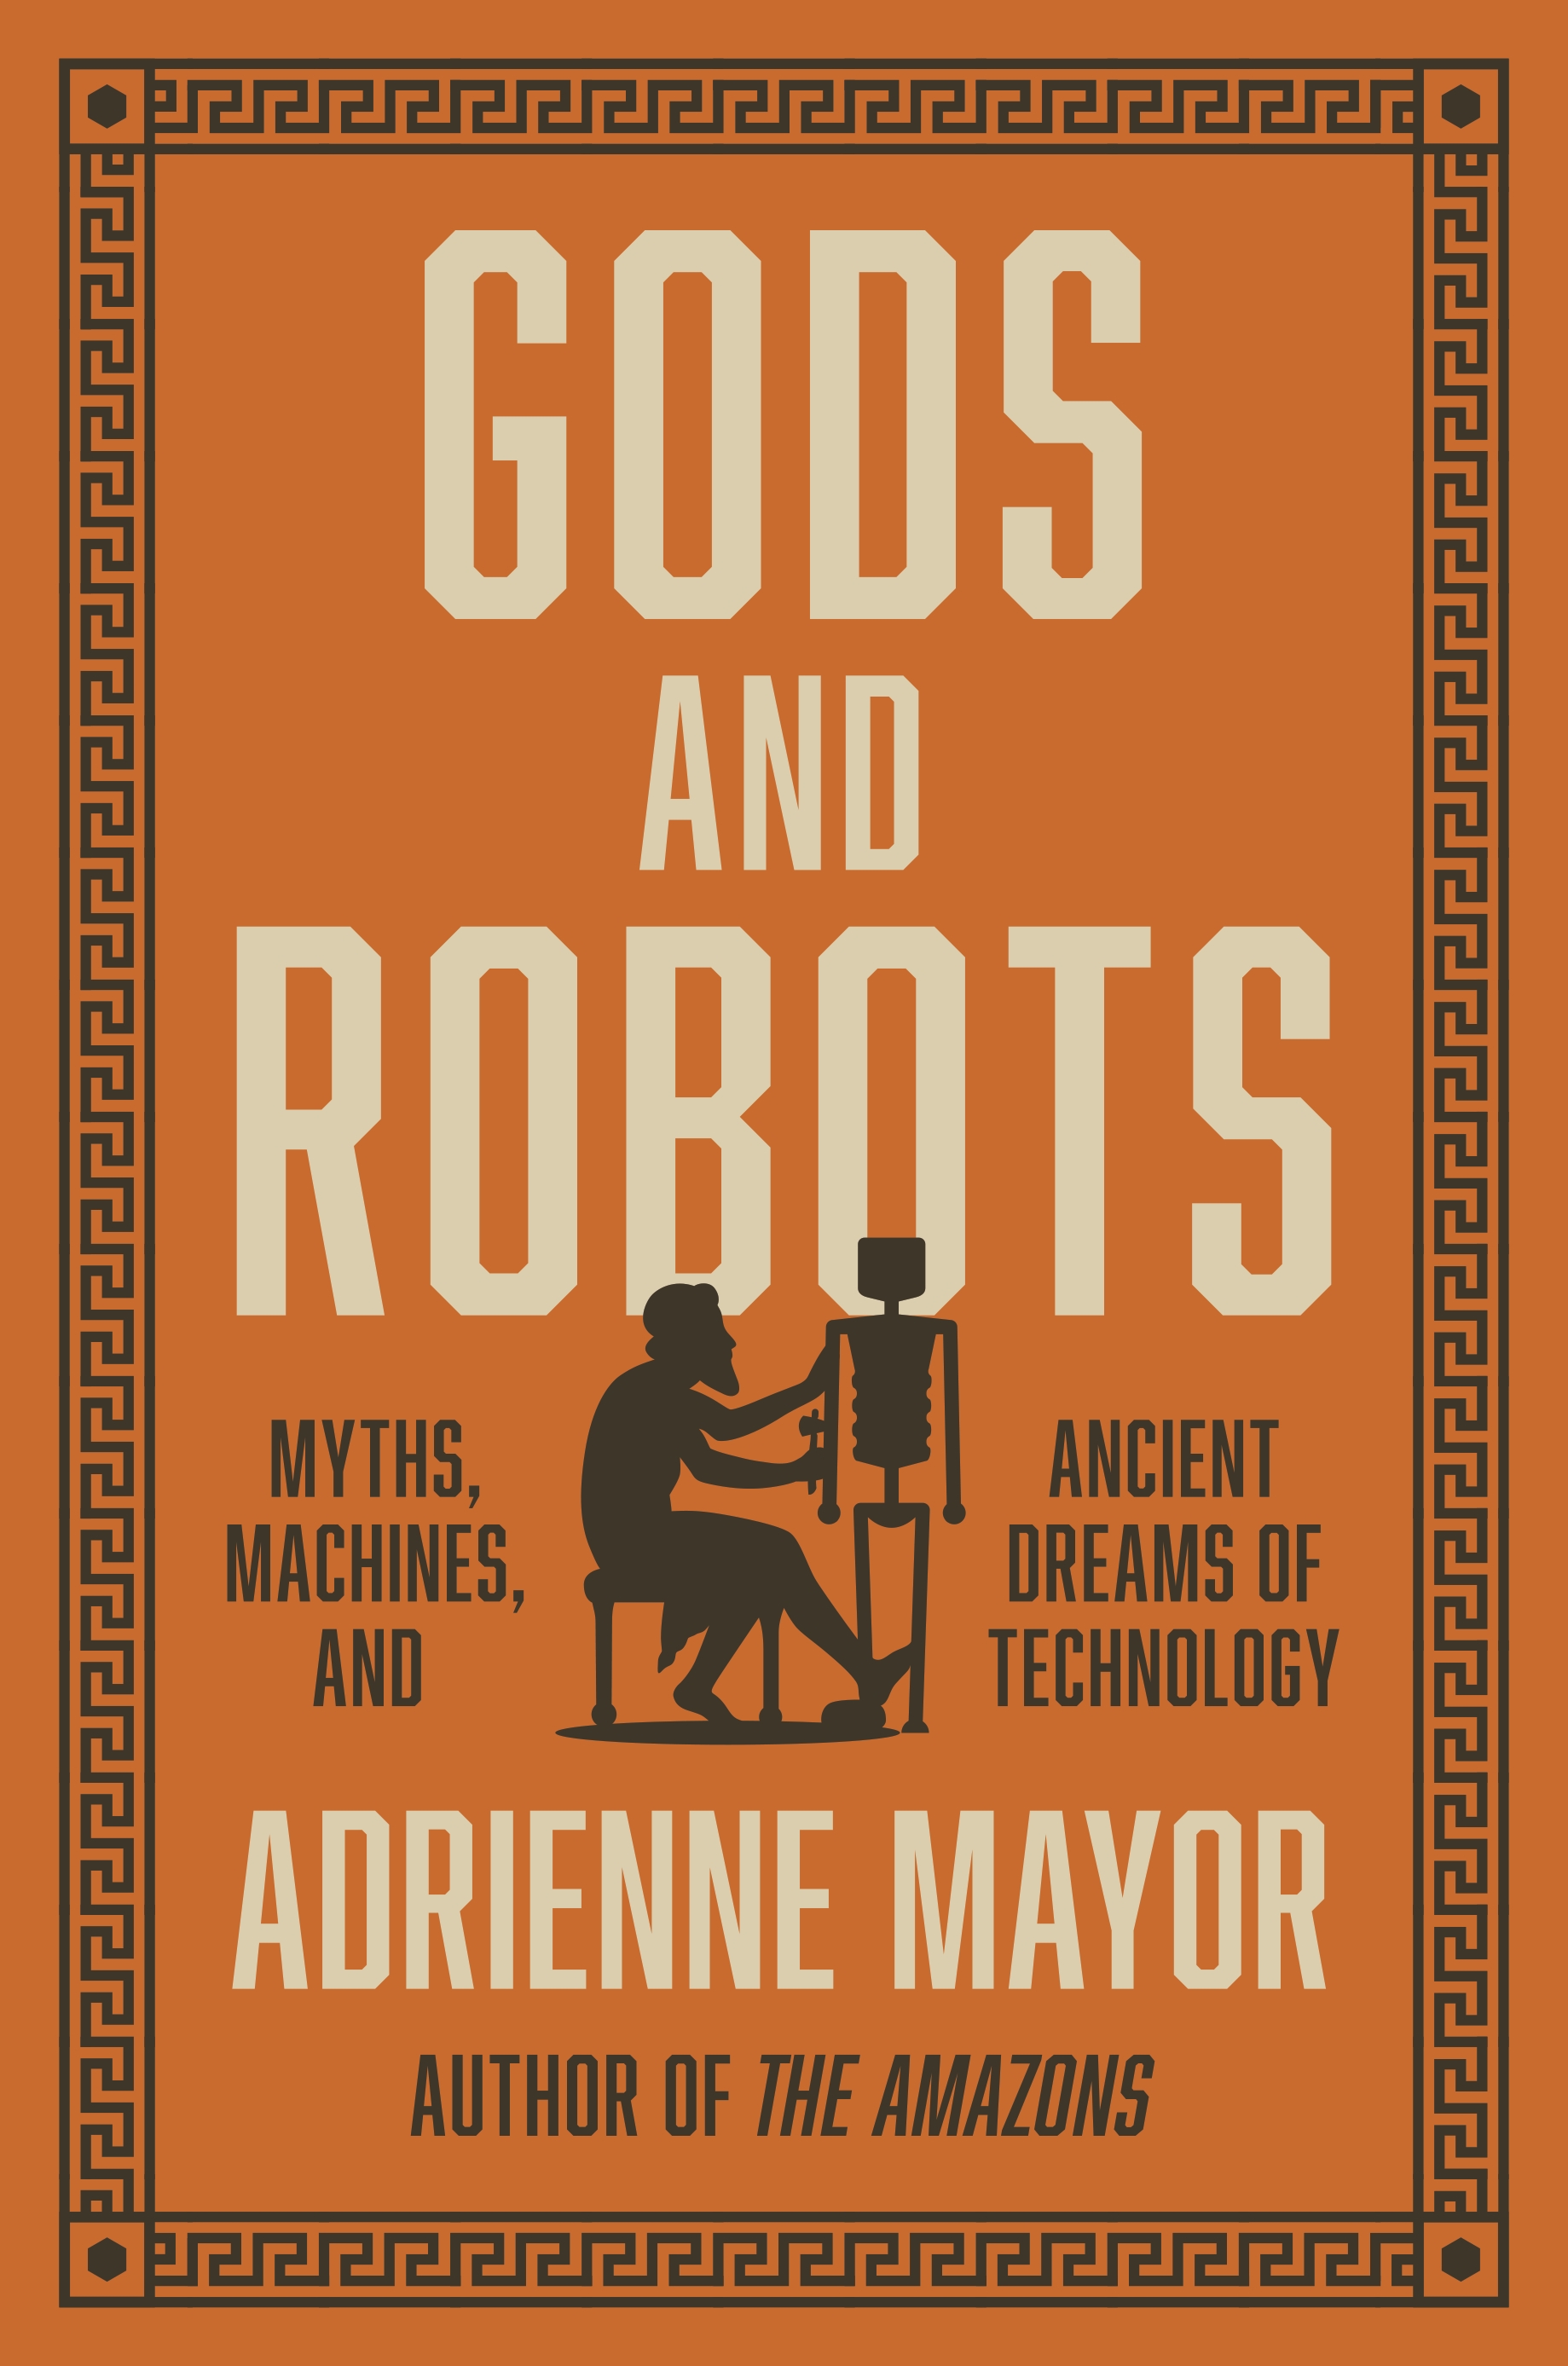 University　and　Gods　Princeton　Robots　Press